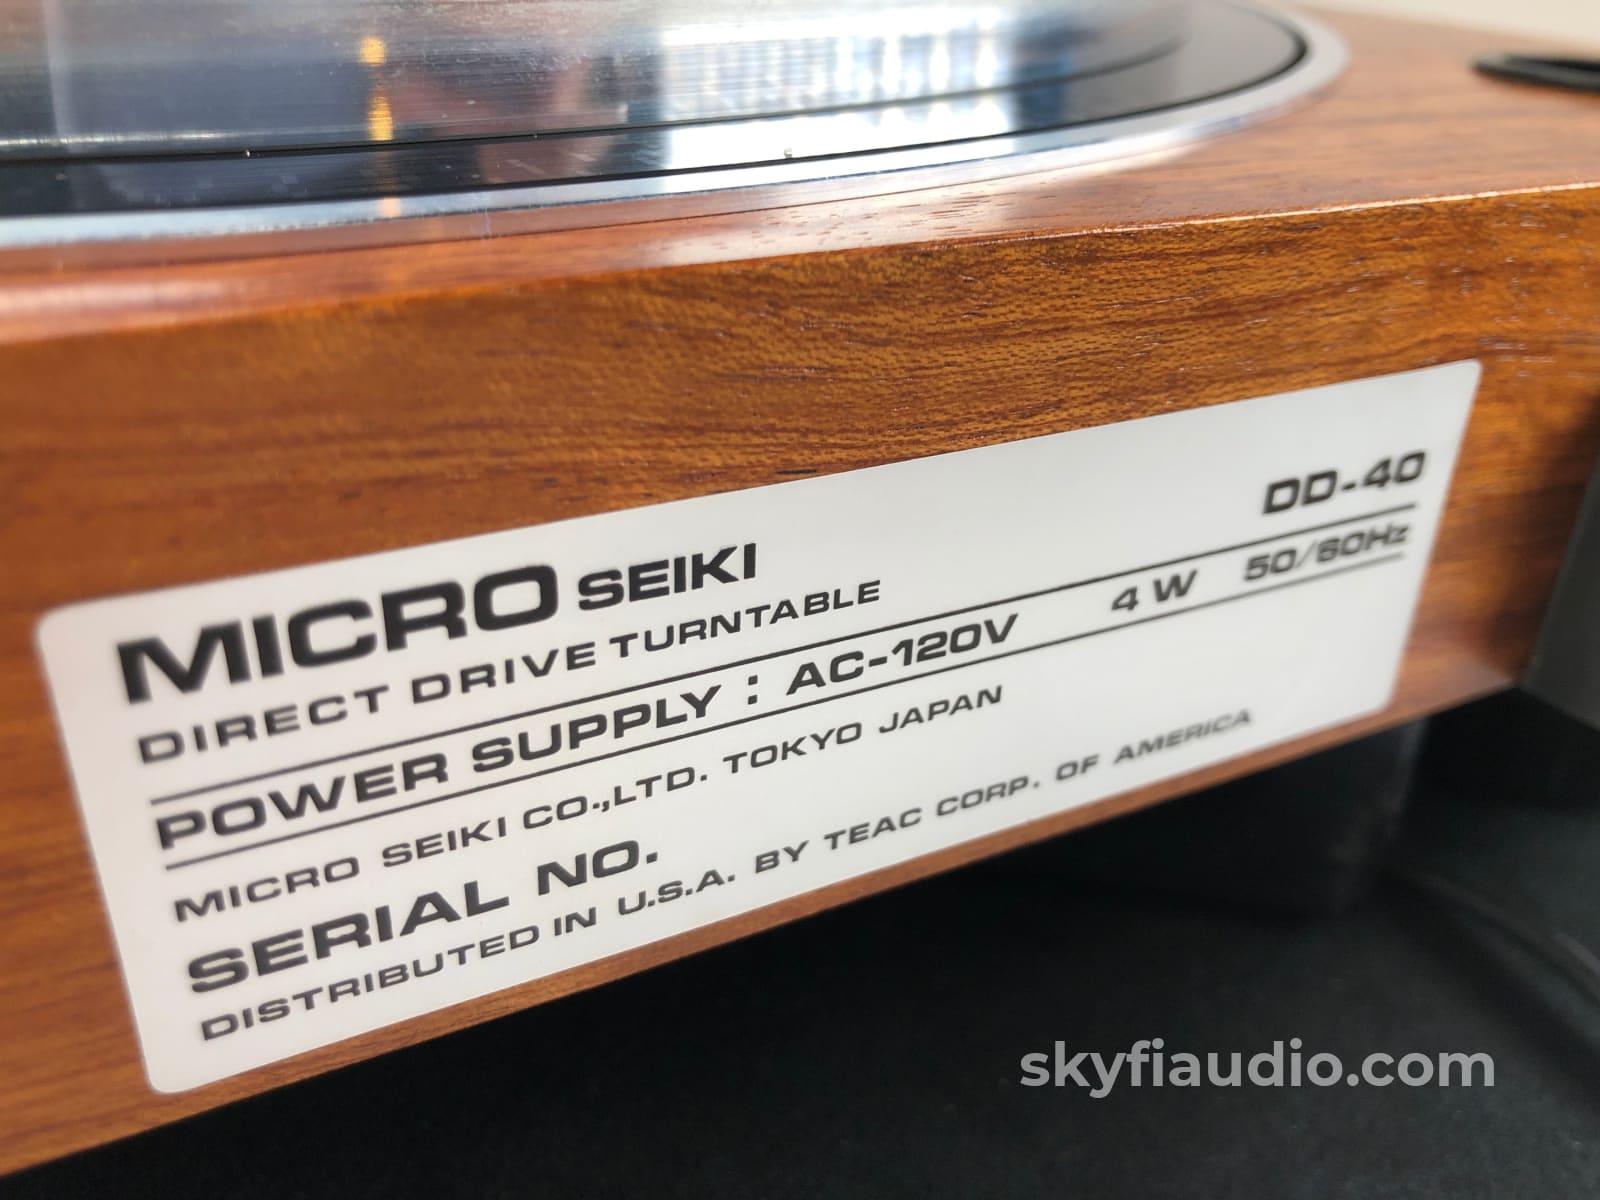 Micro Seiki Dd-40 Vintage Turntable - Gorgeous Wood Plinth